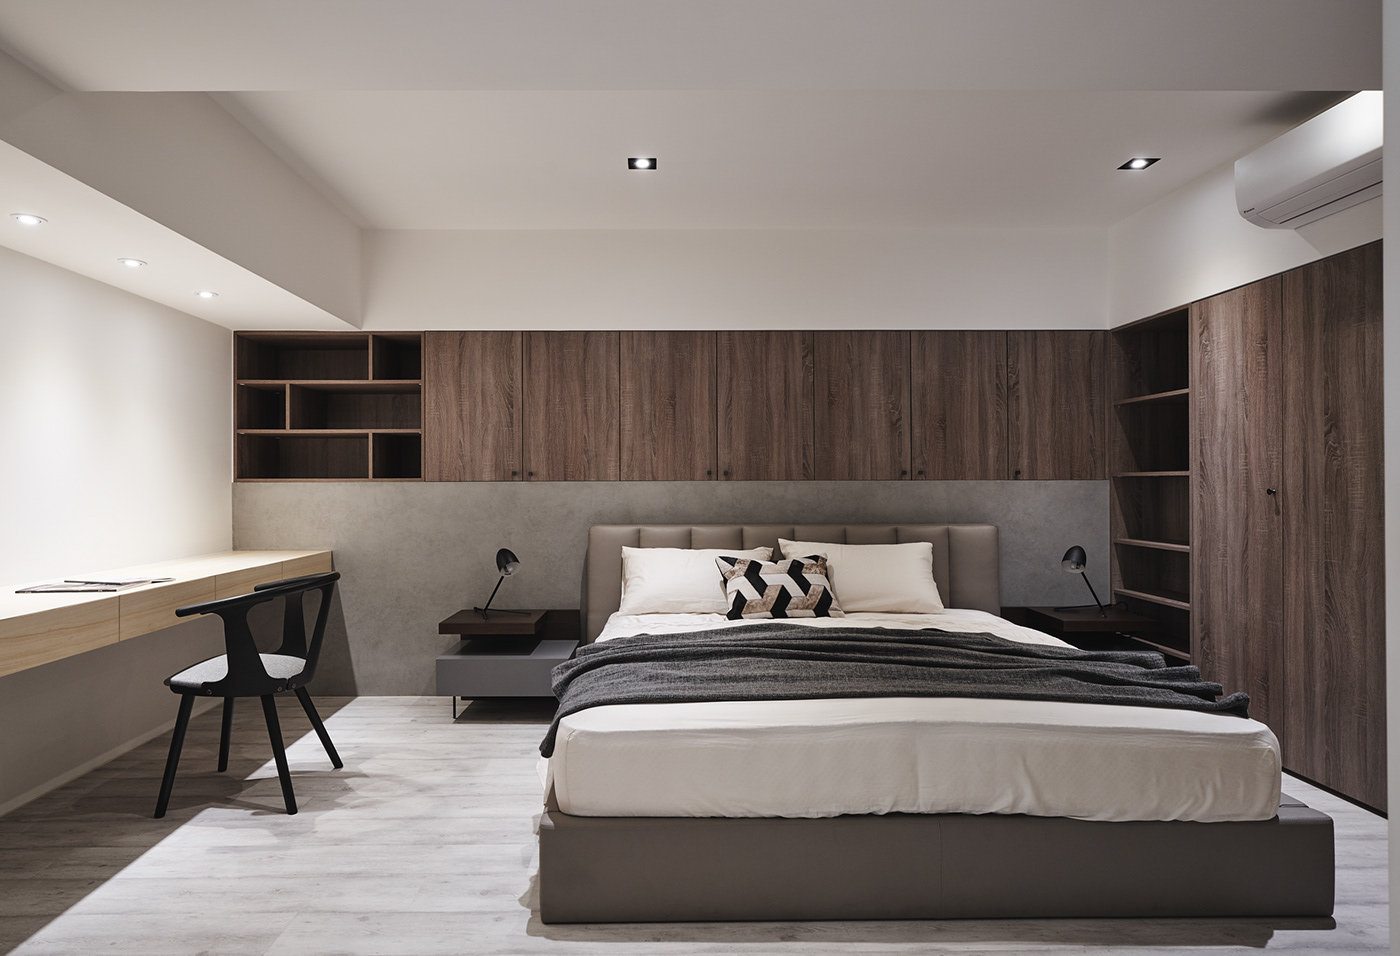 home HOUSE DESIGN interior design  mezzanine Residence minimalist Black&white home style taiwan wood